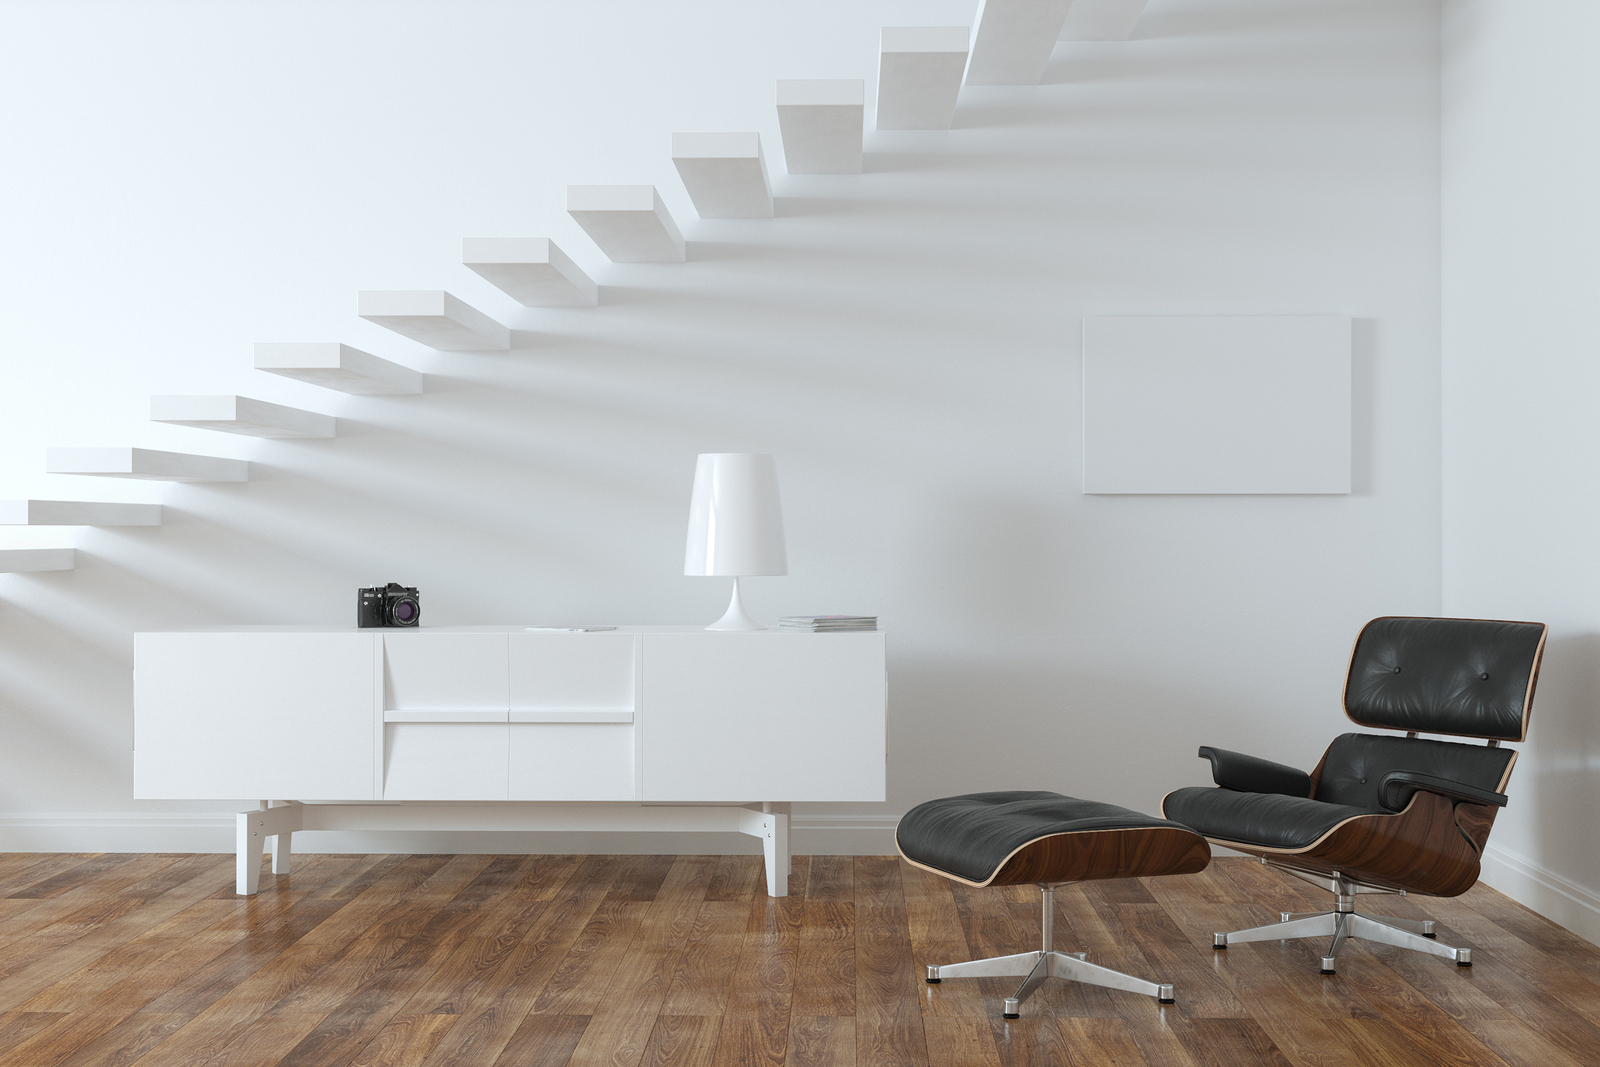 White Lounge Minimalistic Room With Upstairs (luxury interior)